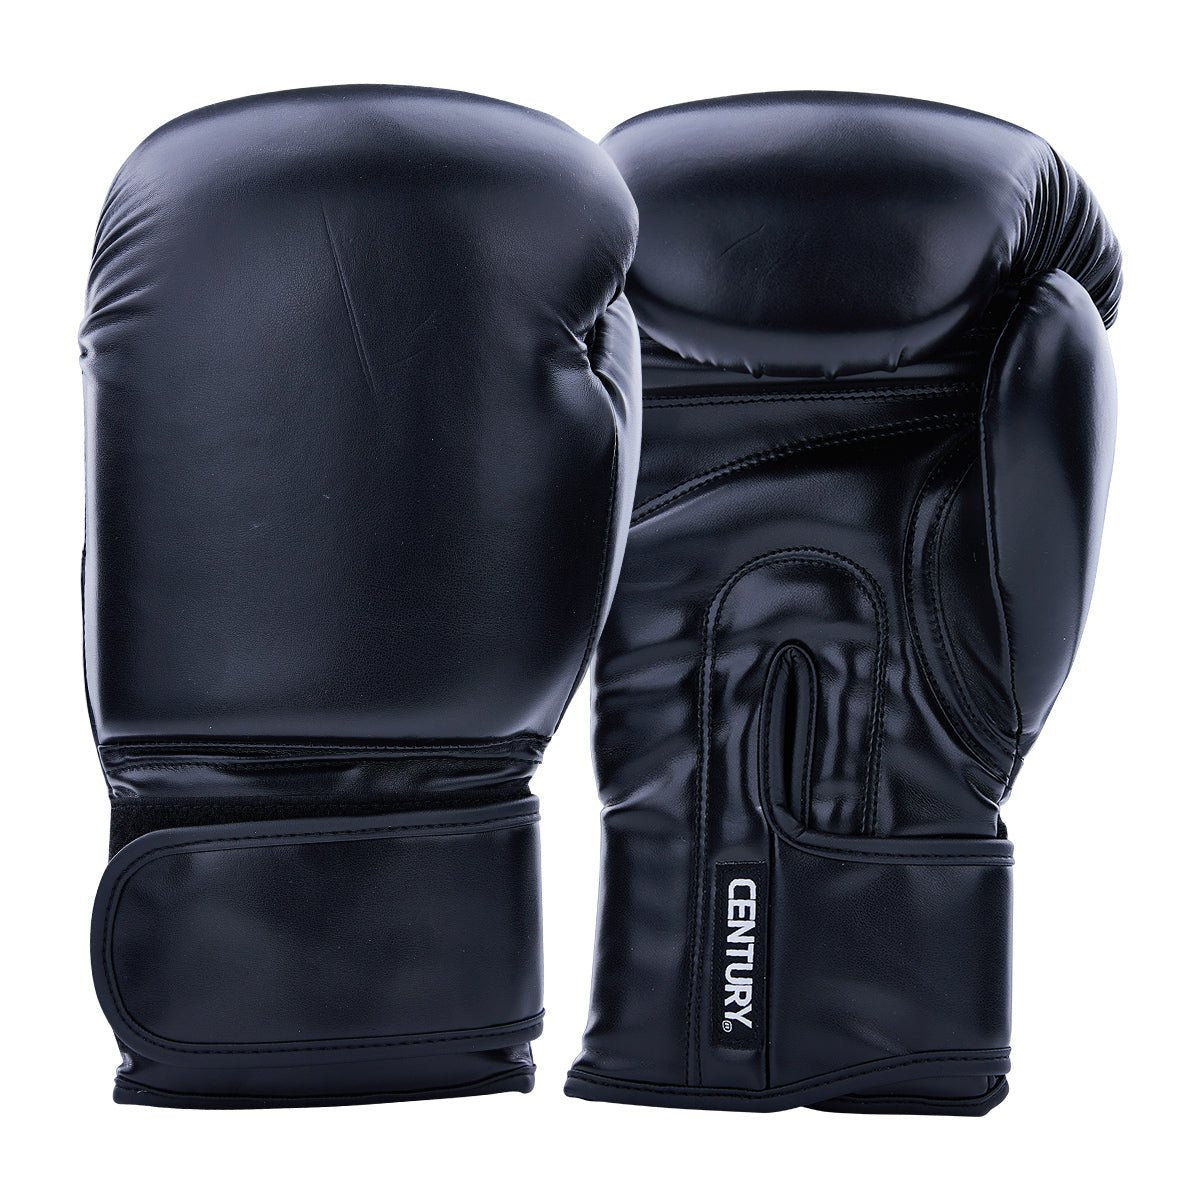 Century Solid Boxing Glove Black